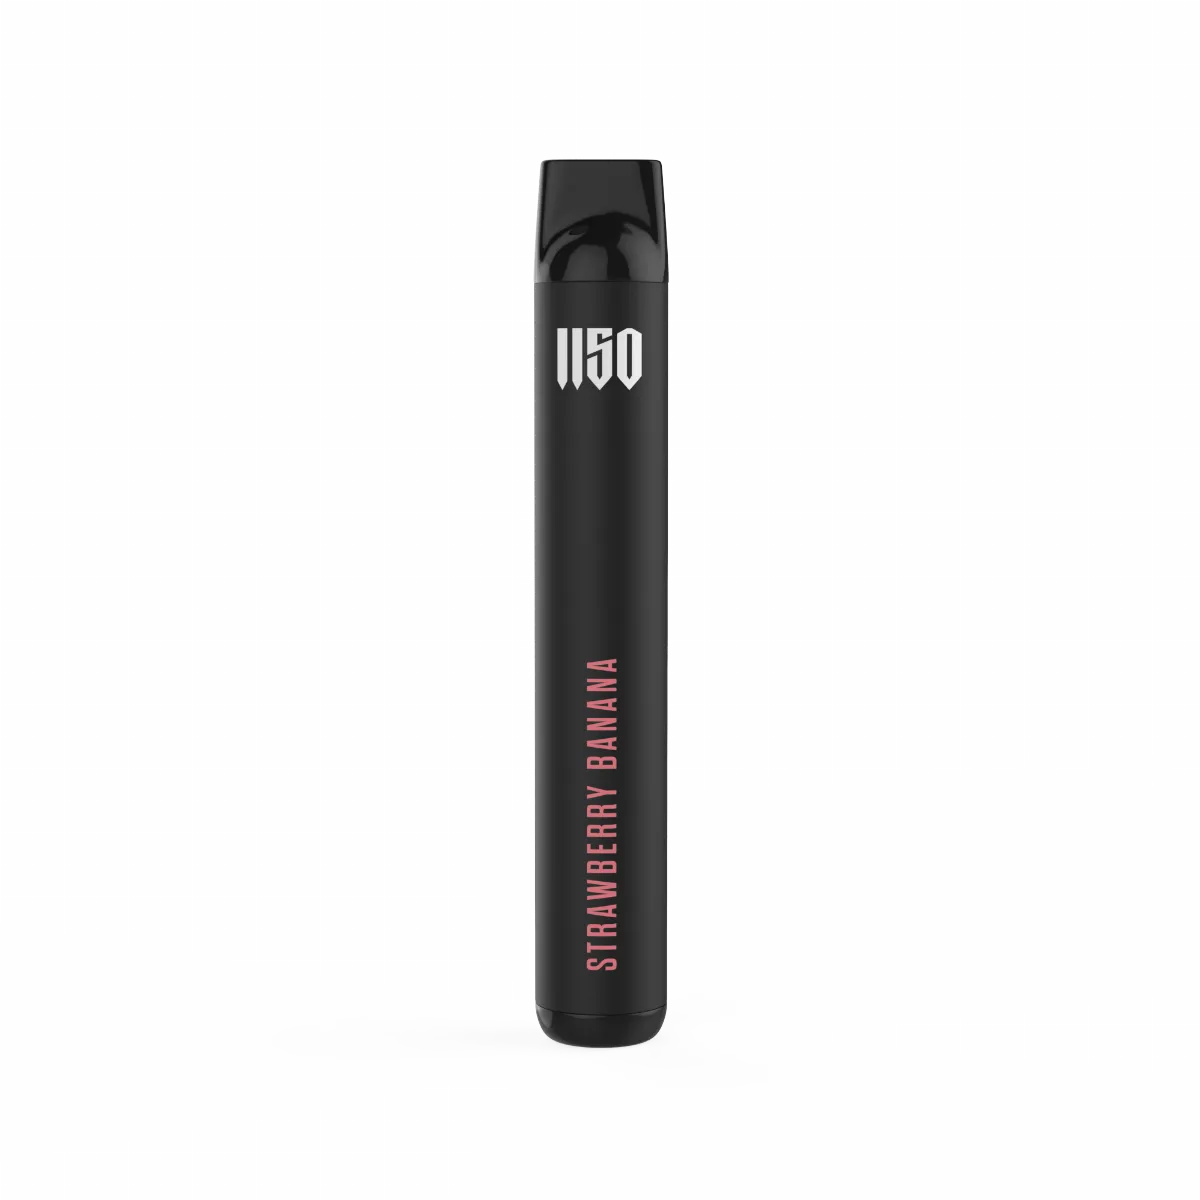 1150 Vapestick Strawberry Banana E-Zigarette / Vape Online Kaufen